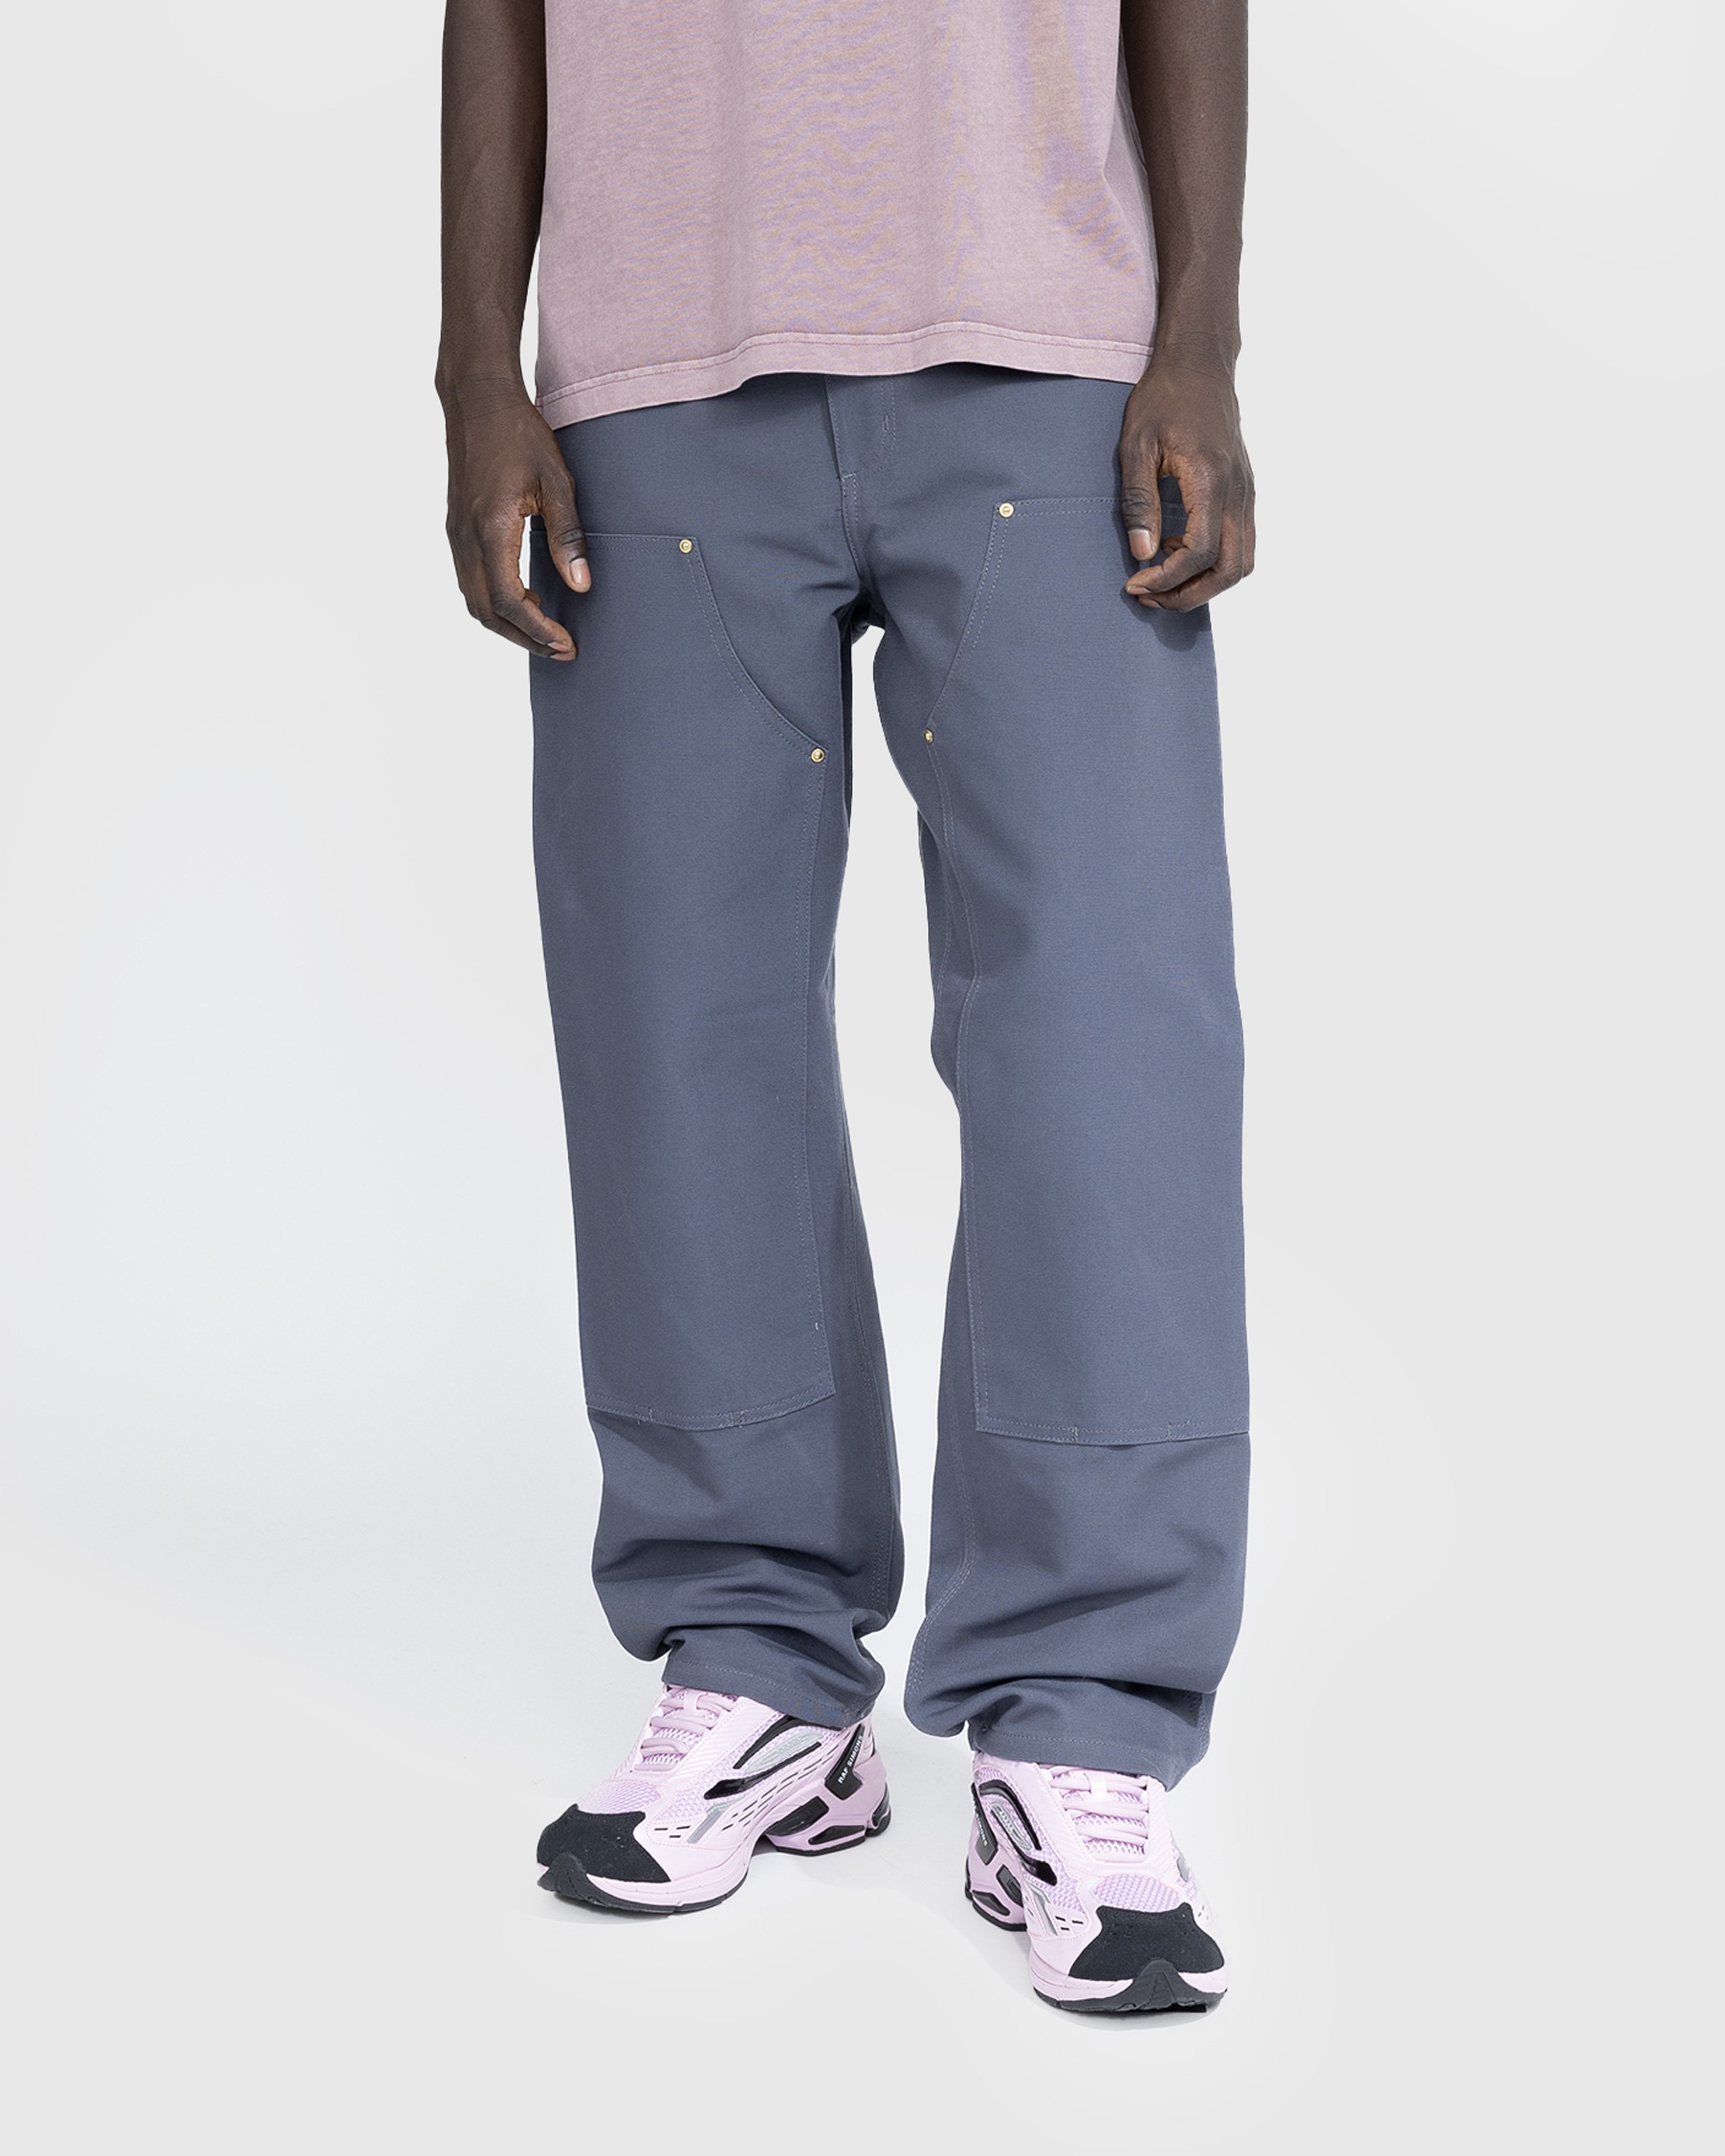 Carhartt WIP - Double Knee Pant Zeus/Rigid - Clothing - Grey - Image 2